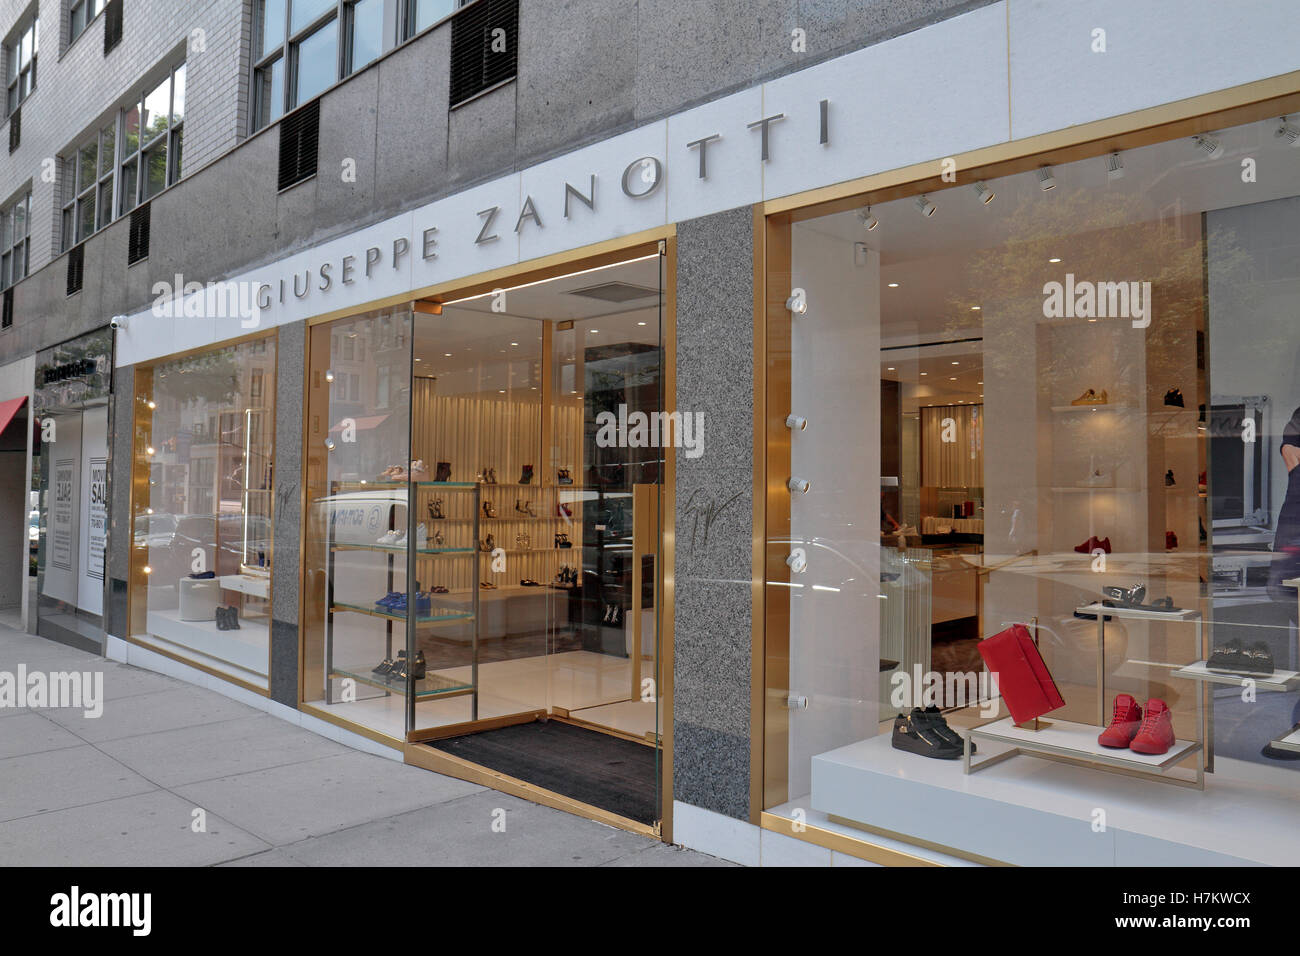 Giuseppe Zanotti Banque d'image et photos - Alamy